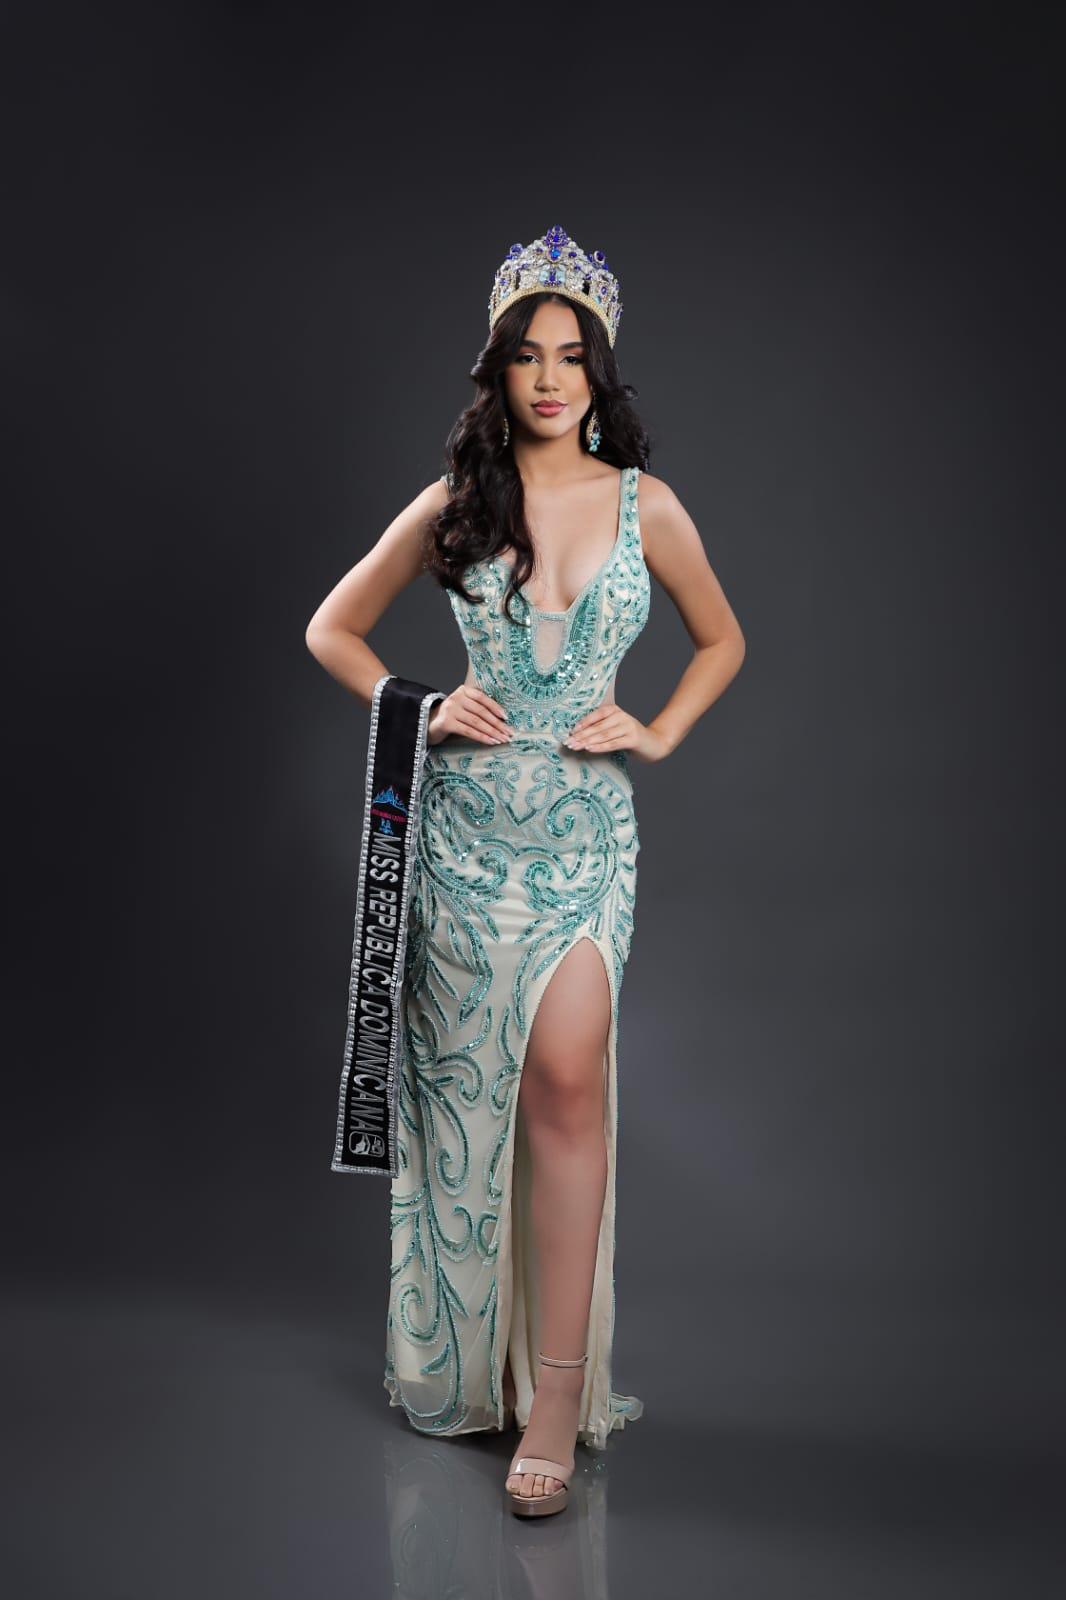 Modelo Camila Fernández, rumbo al Miss Mundo Latina Internacional